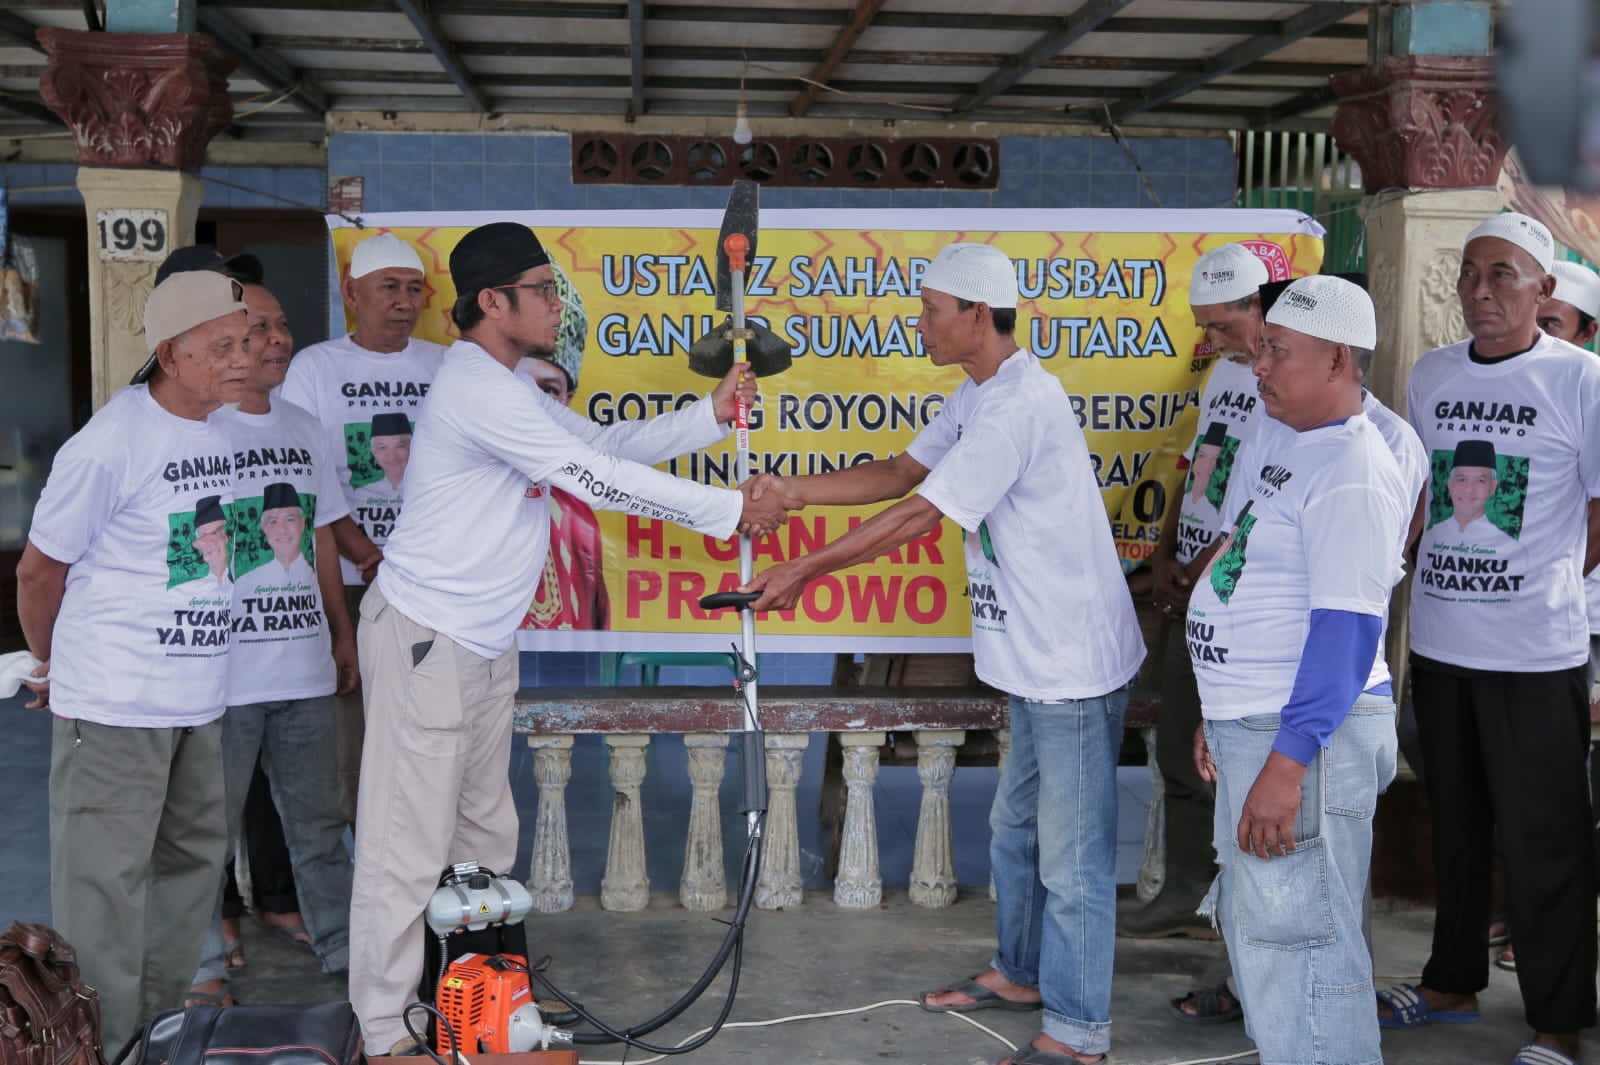 Ustaz Sahabat Ganjar Gotong Royong Bersihkan Lingkungan Bareng Warga di Medan